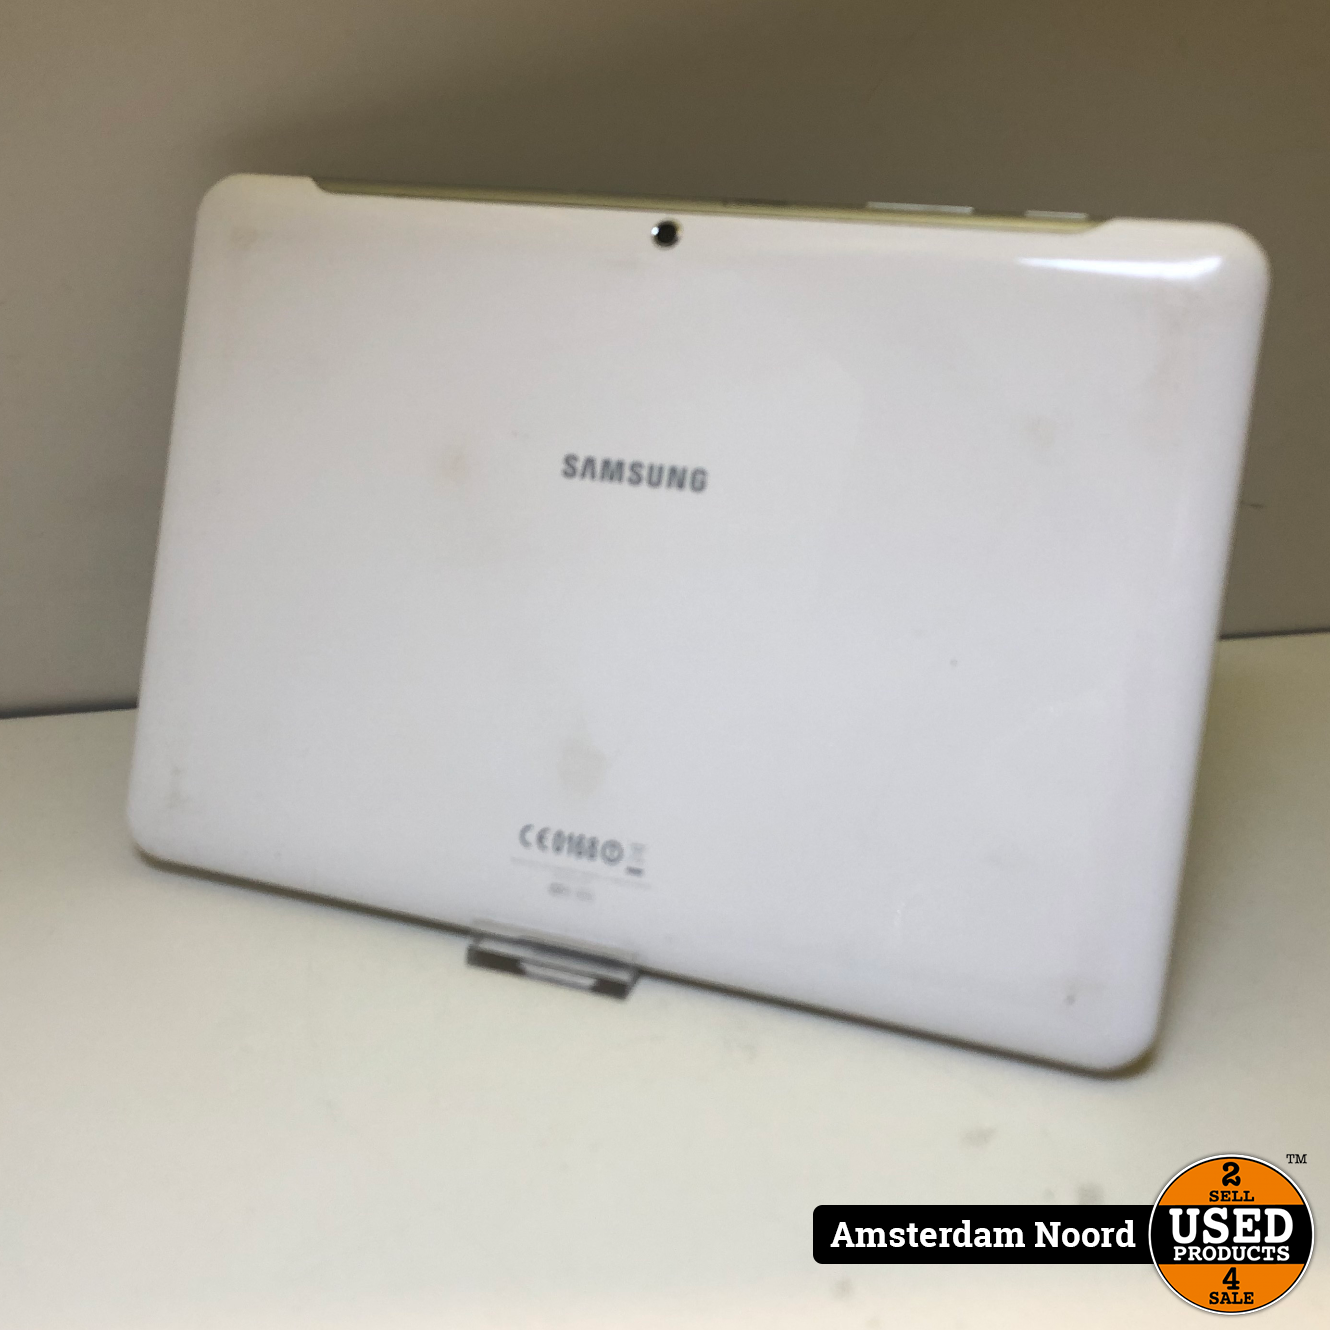 sieraden alliantie Samenwerking Samsung Galaxy Tab 2 10.1 16GB Wifi - Used Products Amsterdam Noord